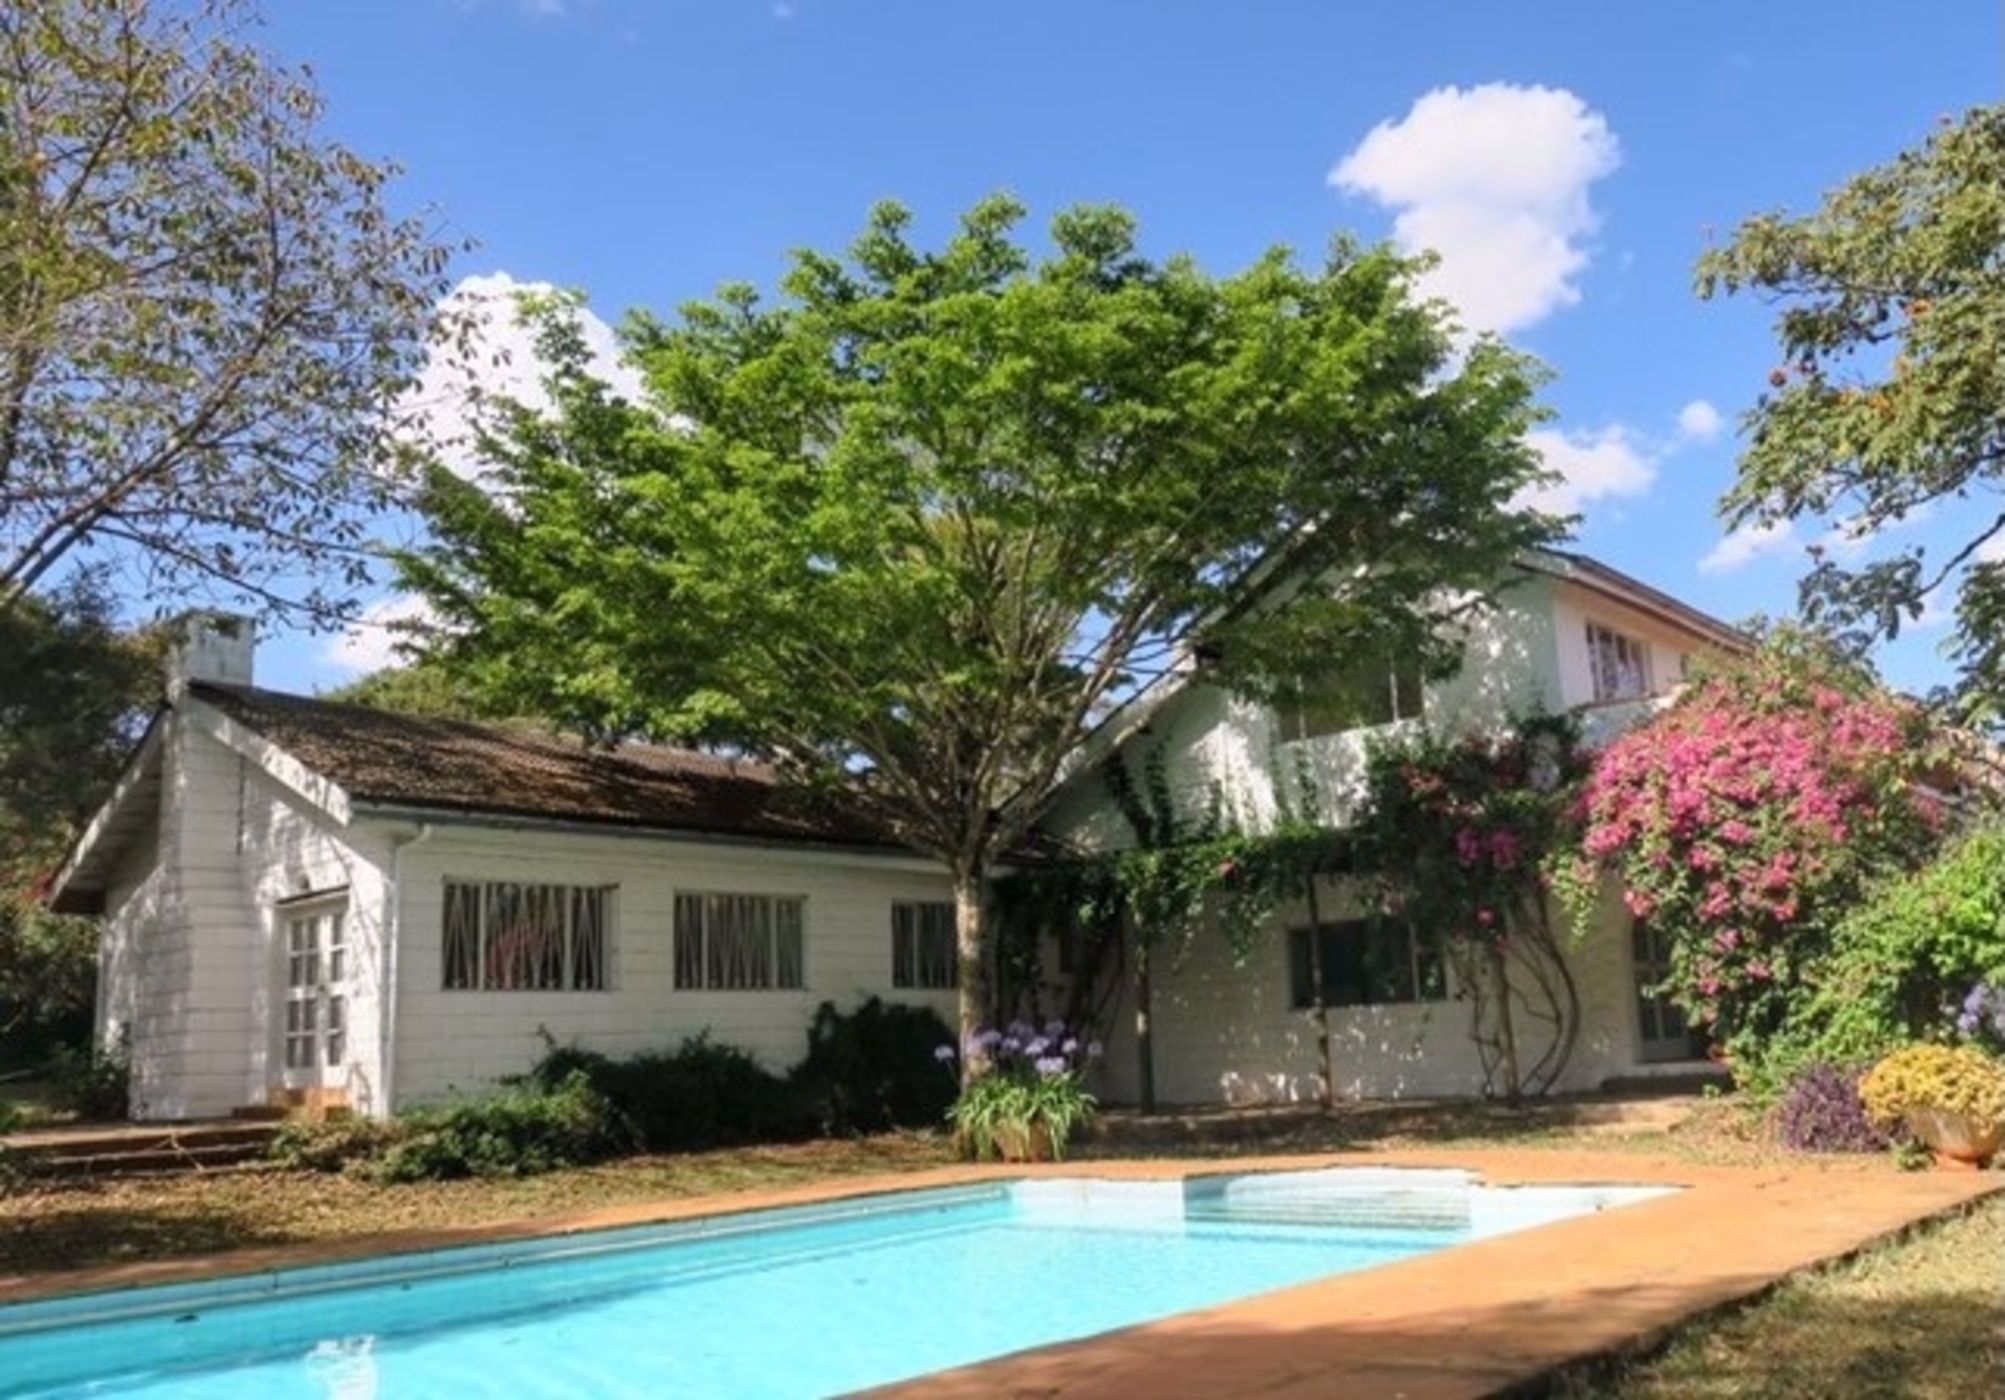 House for sale in Karen (Kenya)